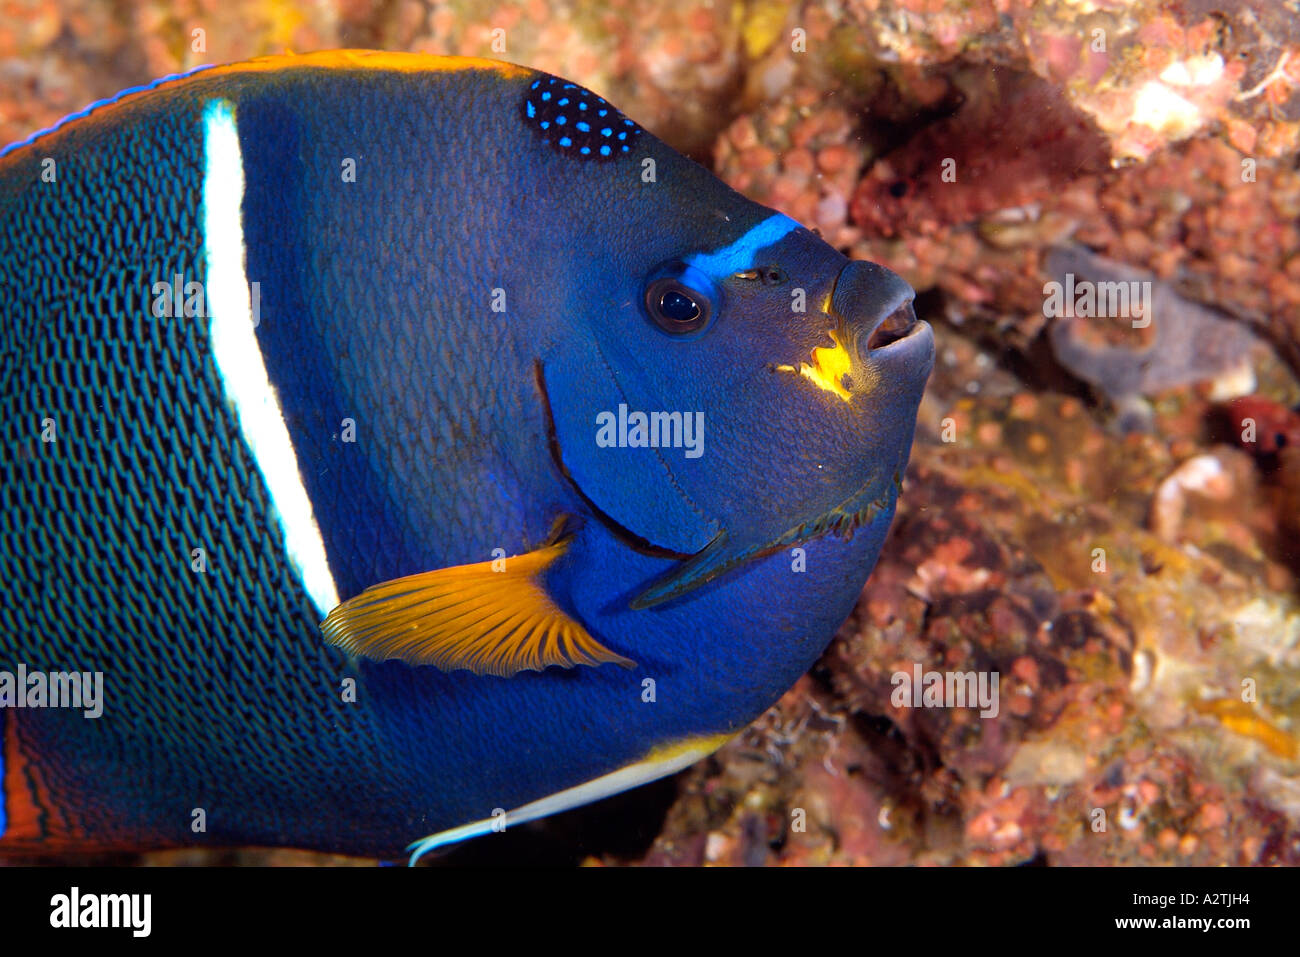 King angelfish in the Galapagos island Stock Photo